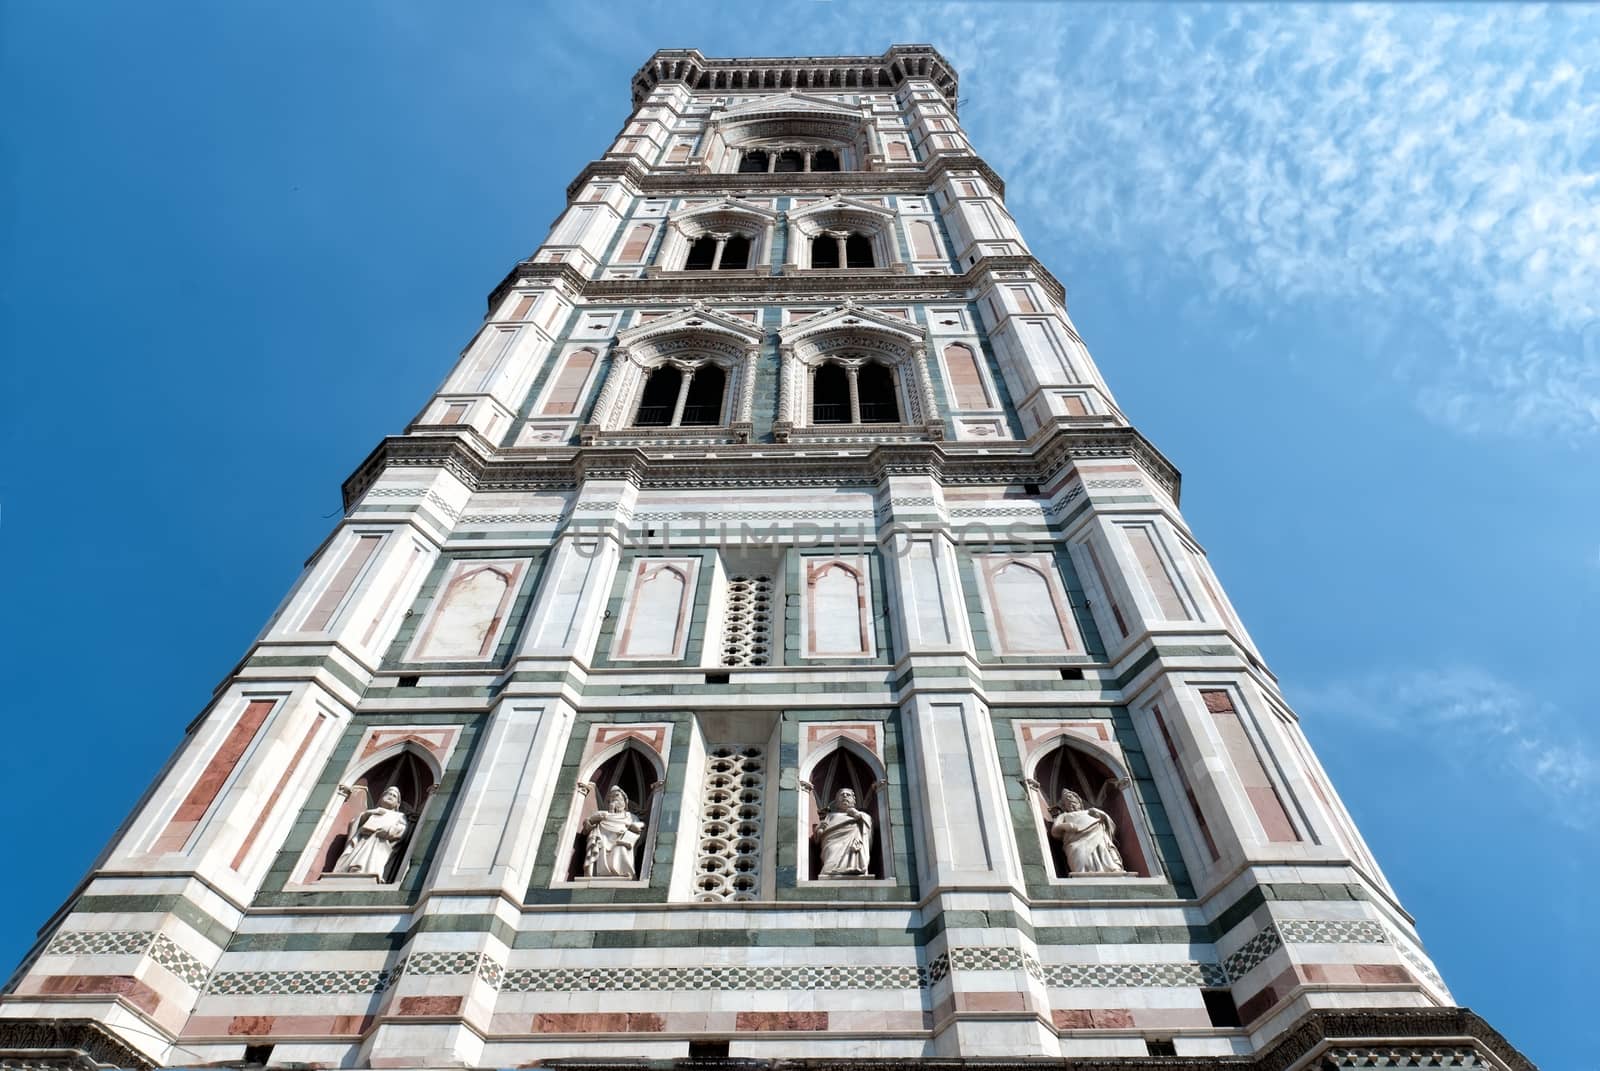 Basilica Santa Maria del Fiore in Florence Italy